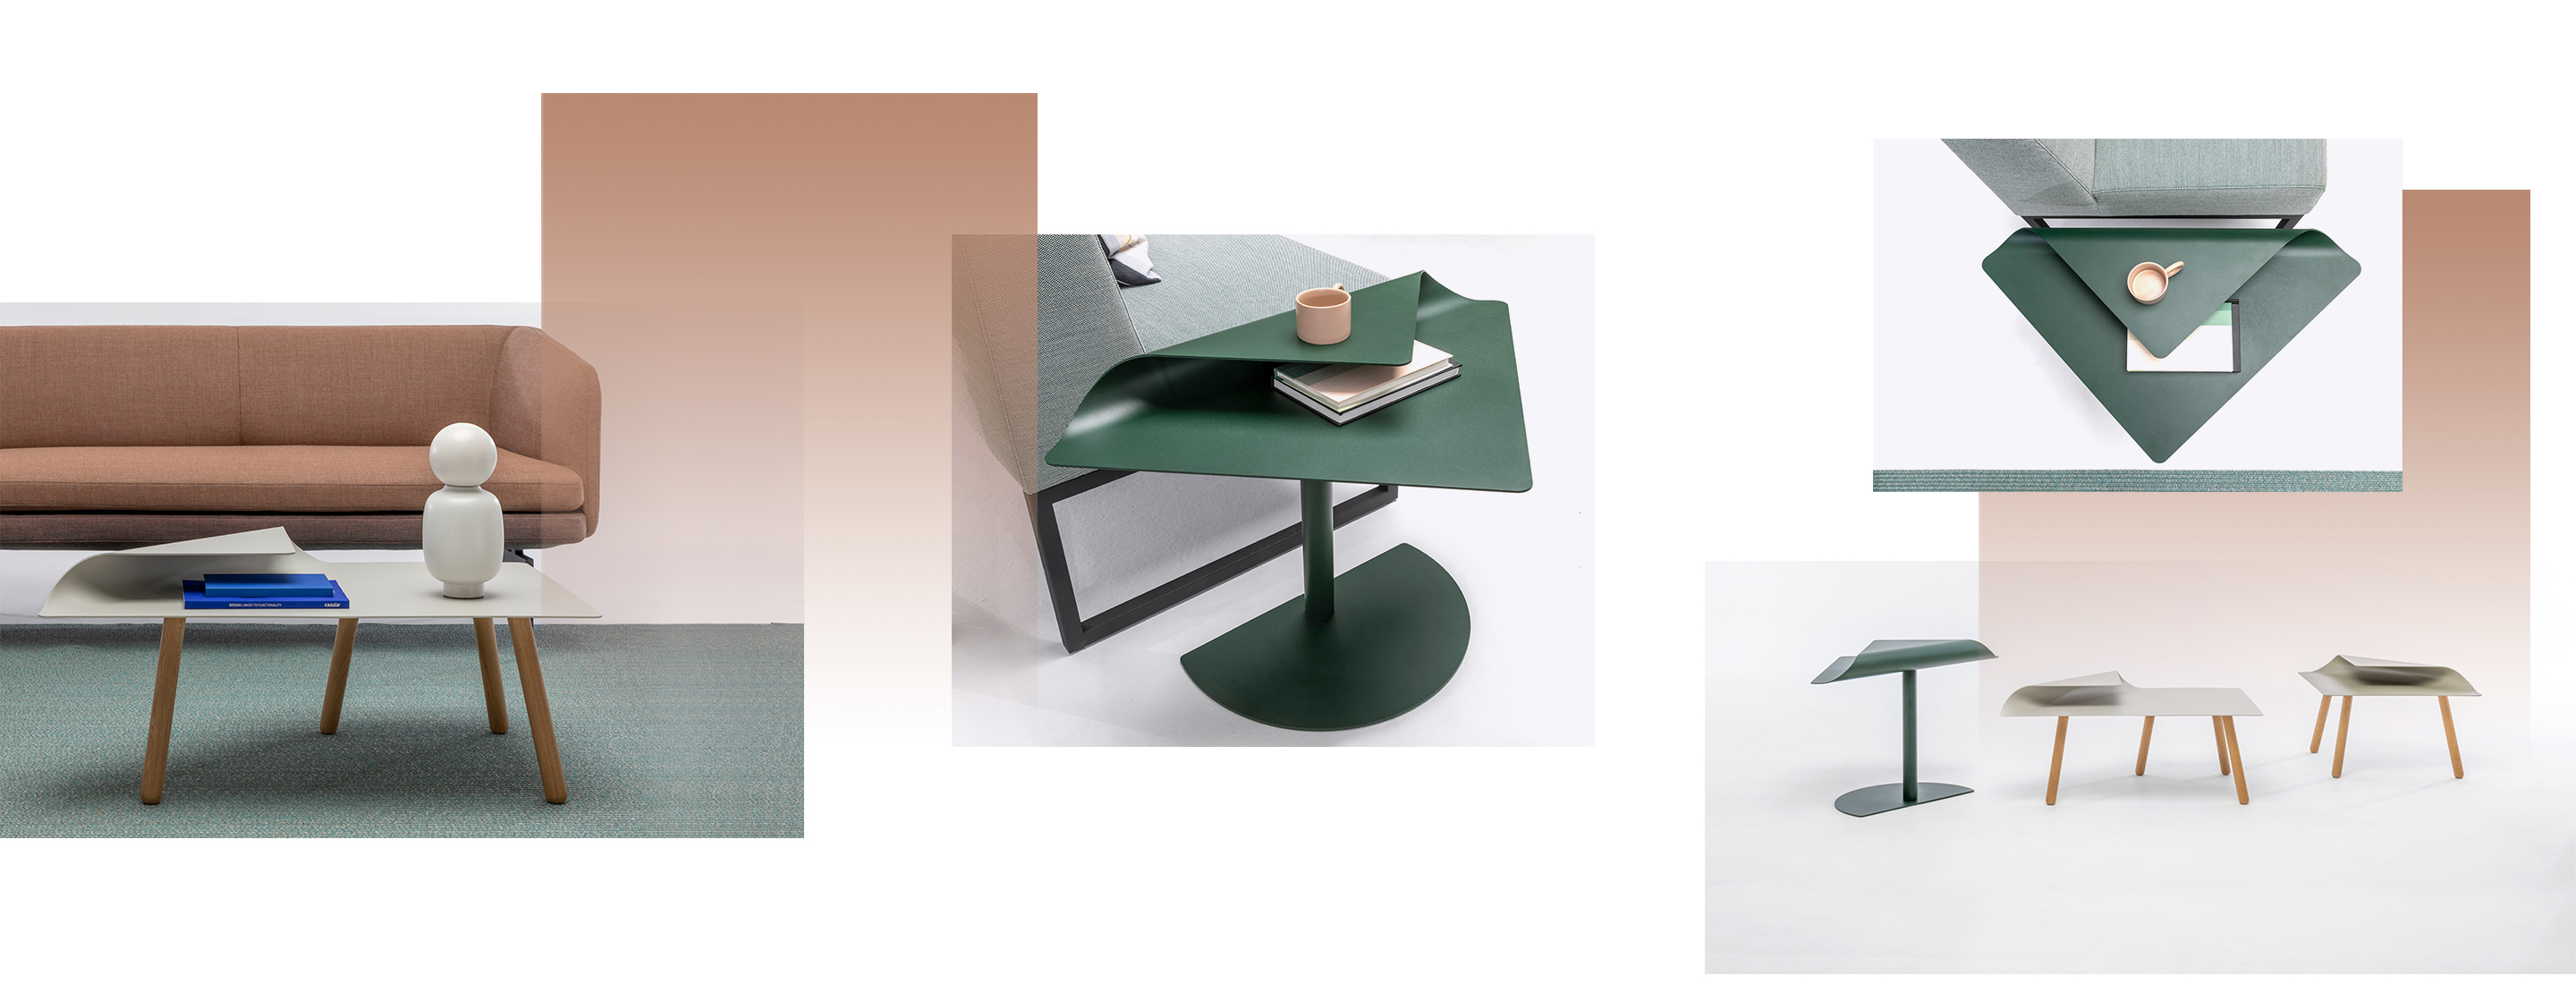 | Casala projectmeubilair, soft seating & akoestische oplossingen